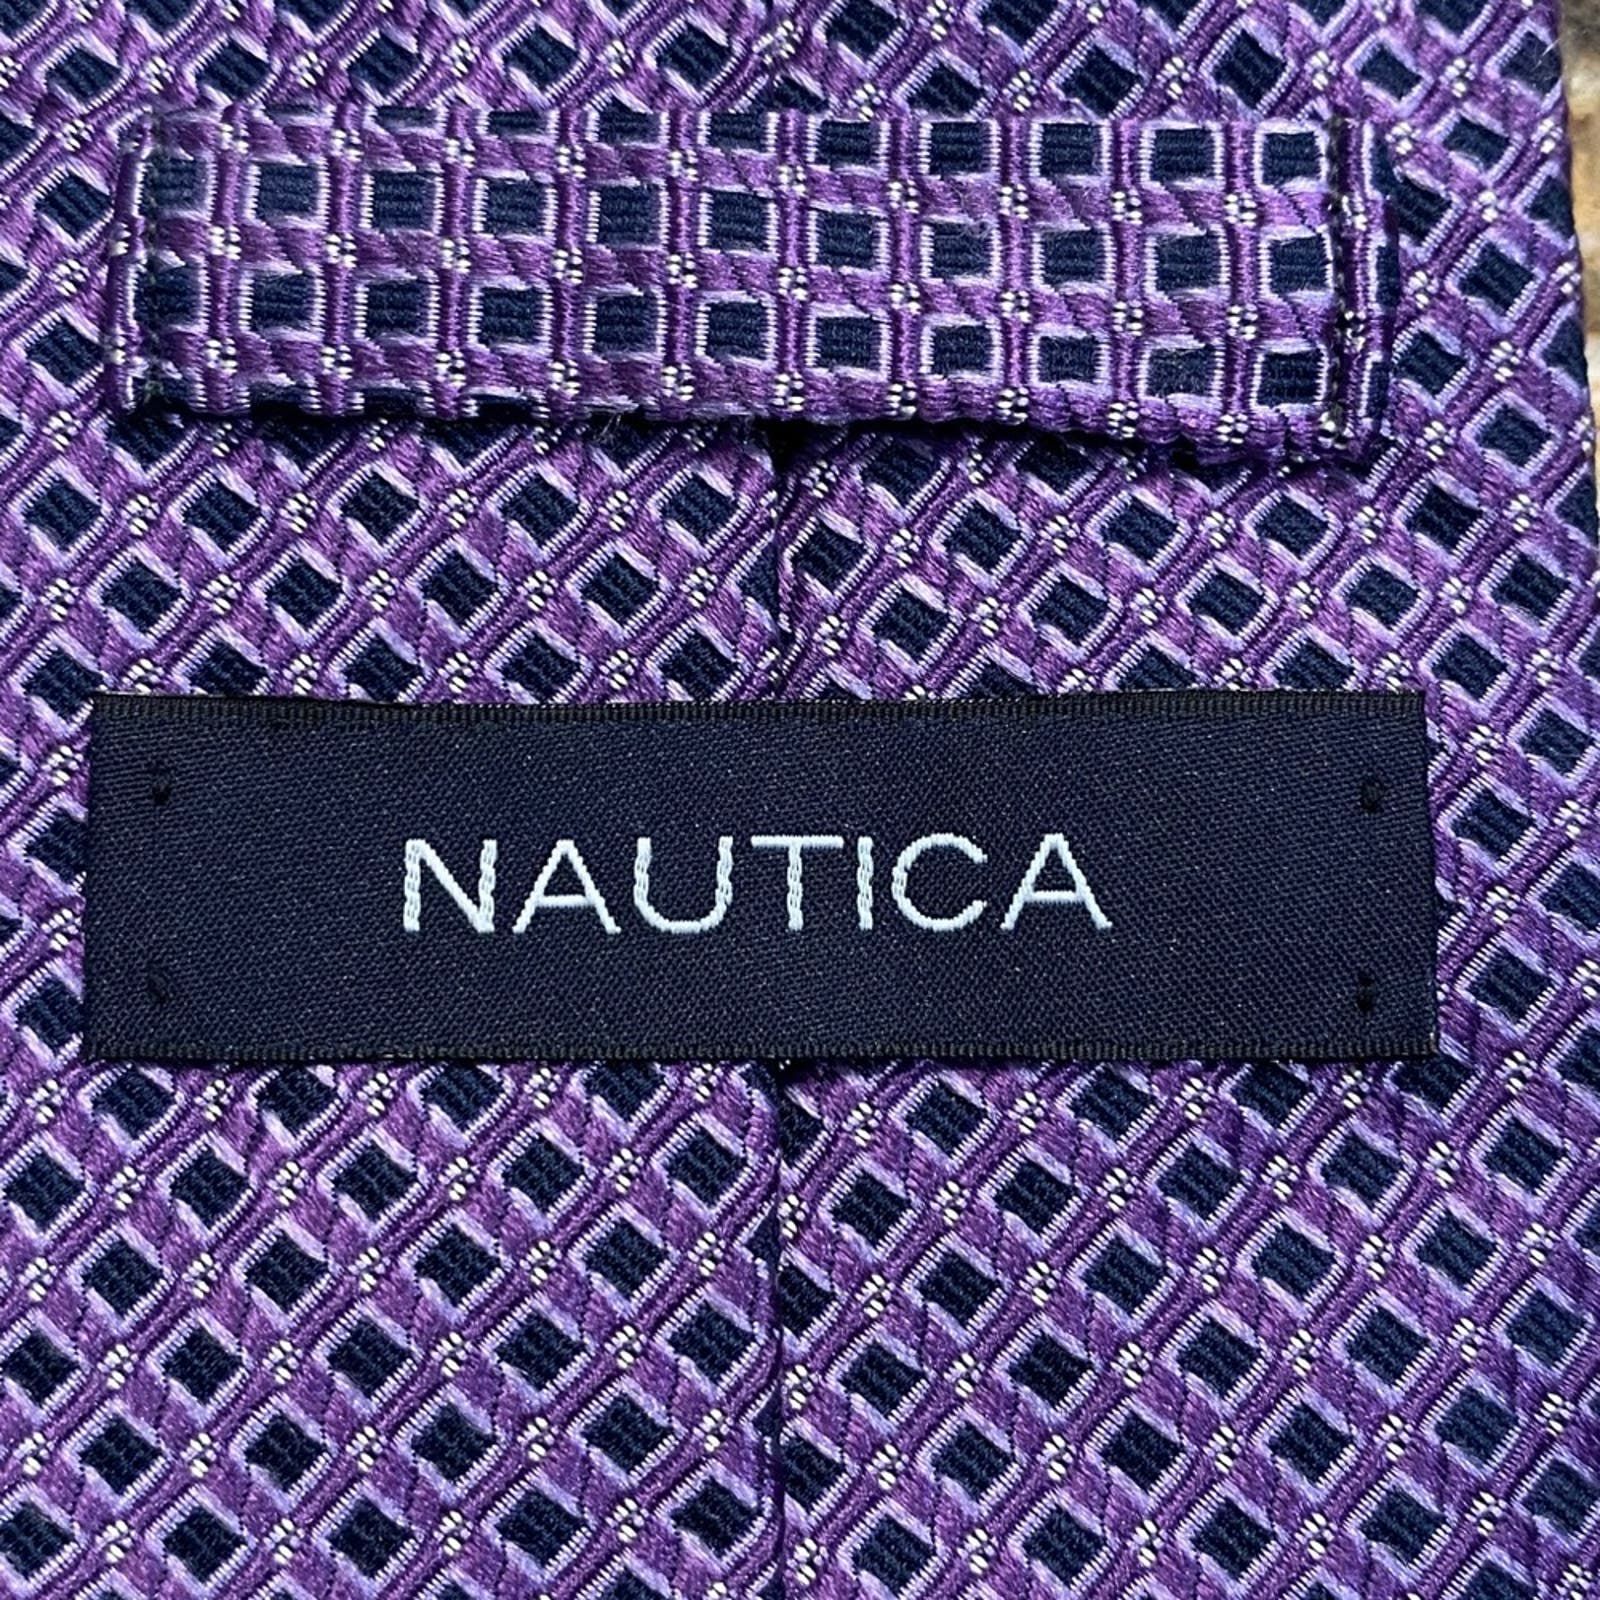 Nautica Nautica Navy and Purple print 100% Silk Tie Size ONE SIZE - 2 Preview